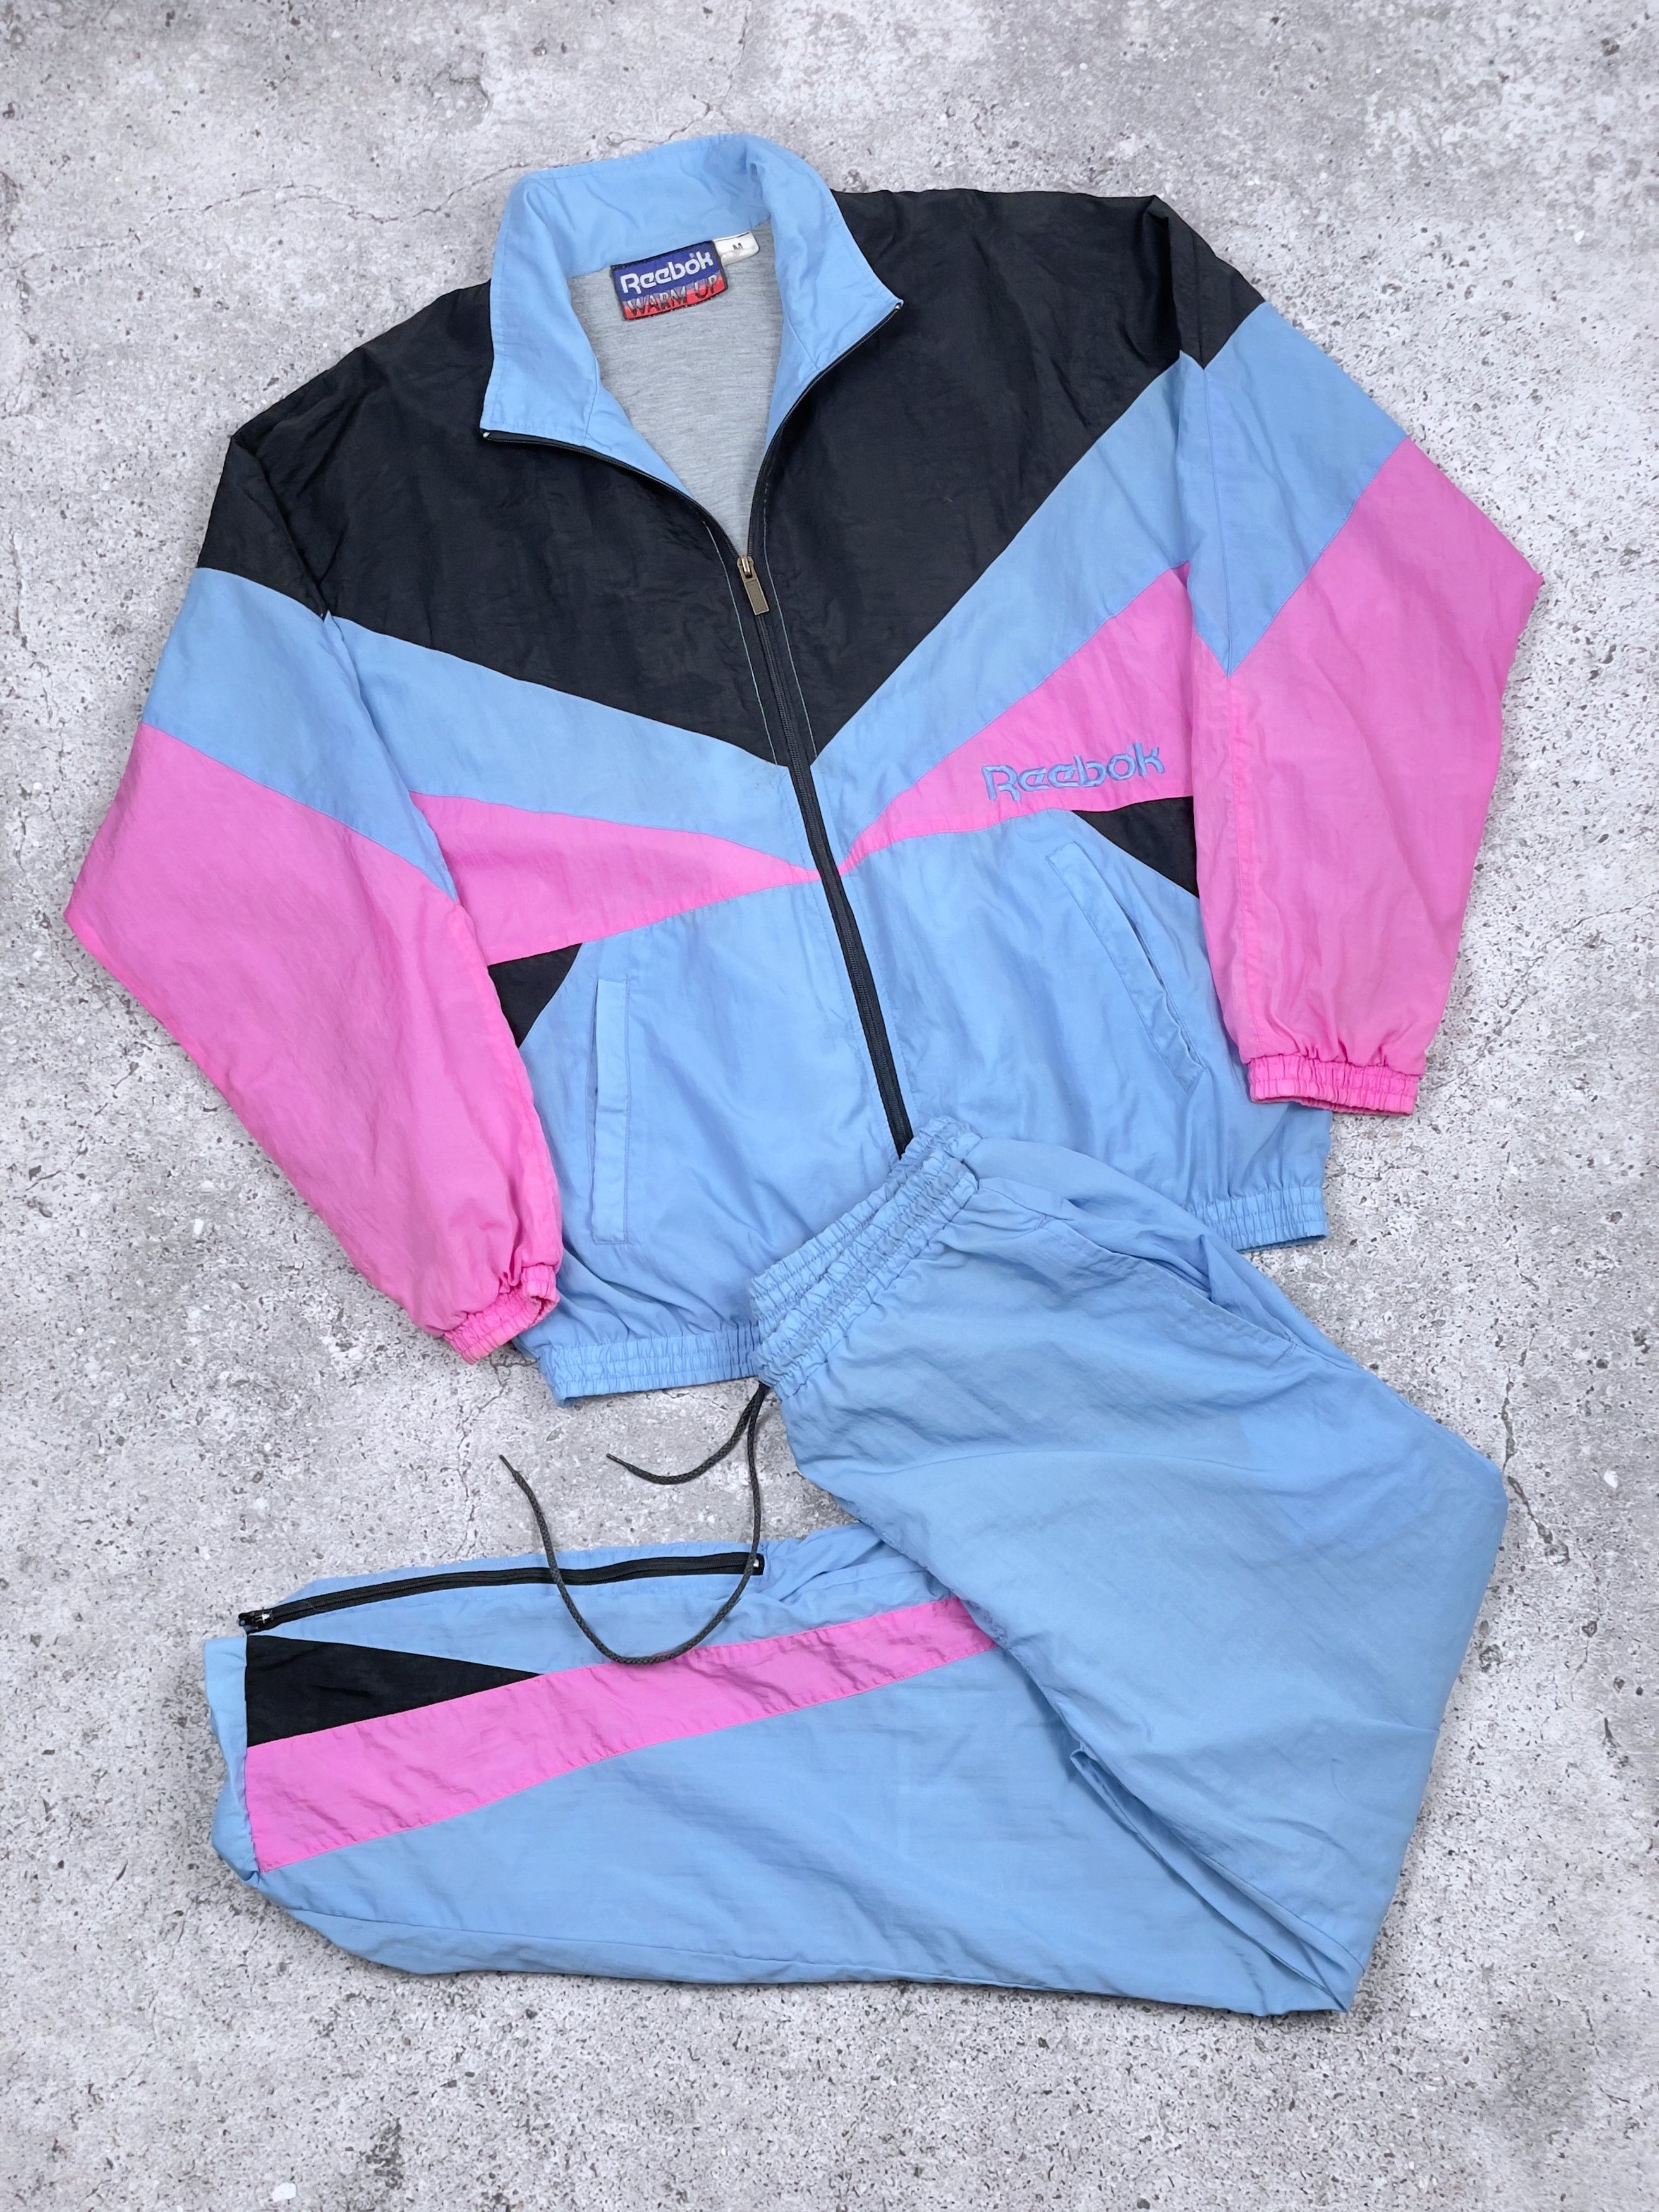 Vintage 80s Reebok Nylon Track Jacket Set Jacket + Pants Size US M / EU 48-50 / 2 - 1 Preview